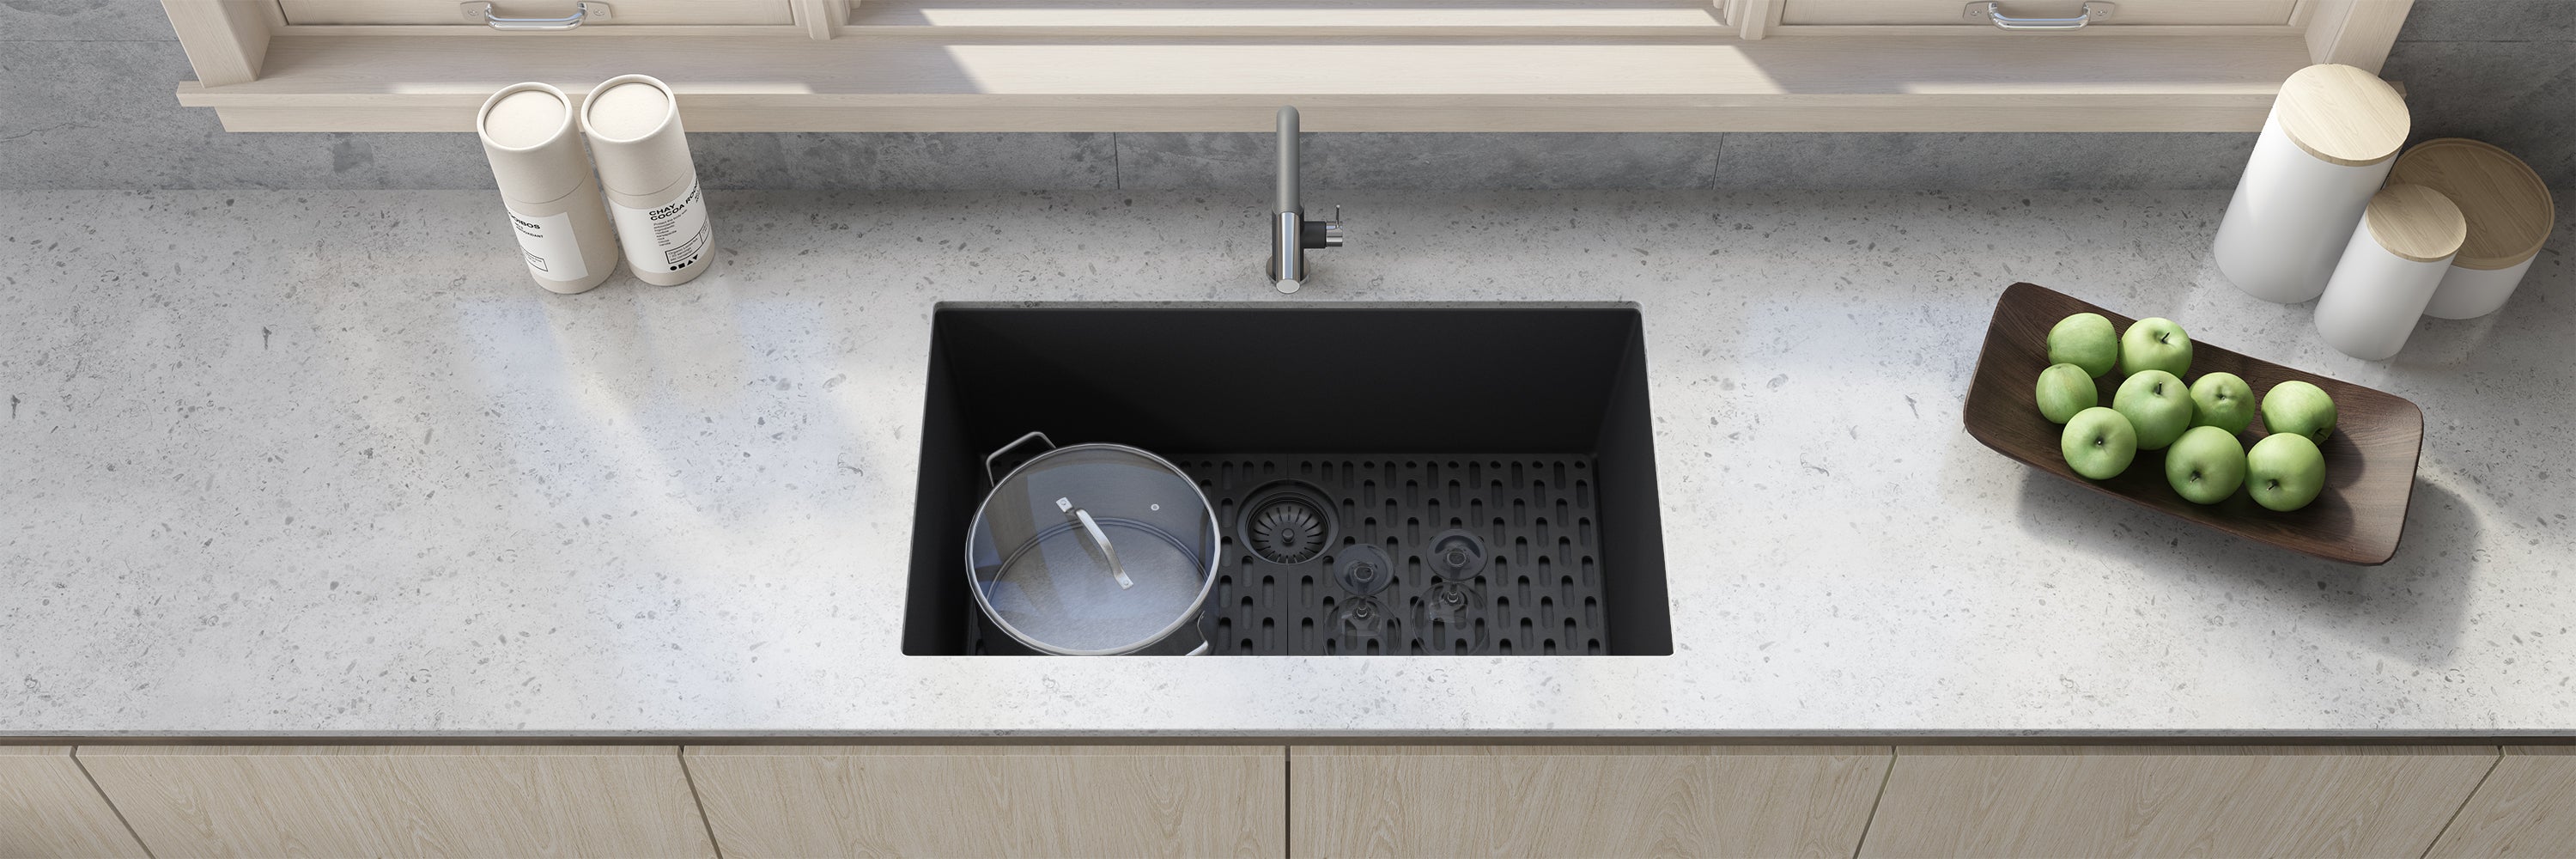 Ruvati 27" Composite Undermount Single Bowl Kitchen Sink in Midnight Black